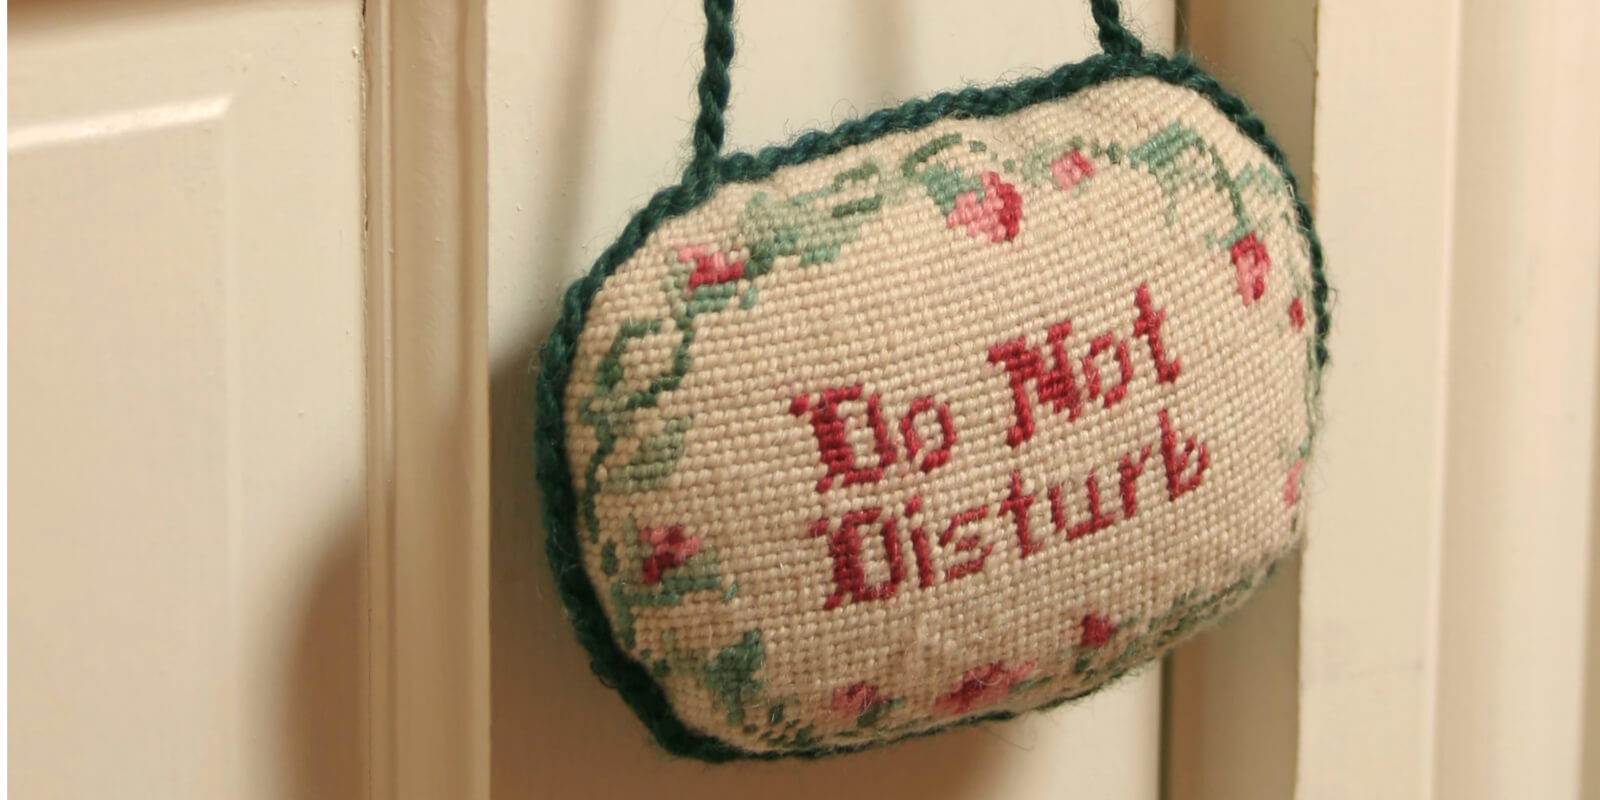 A do not disturb sign hanging on a doorknob.